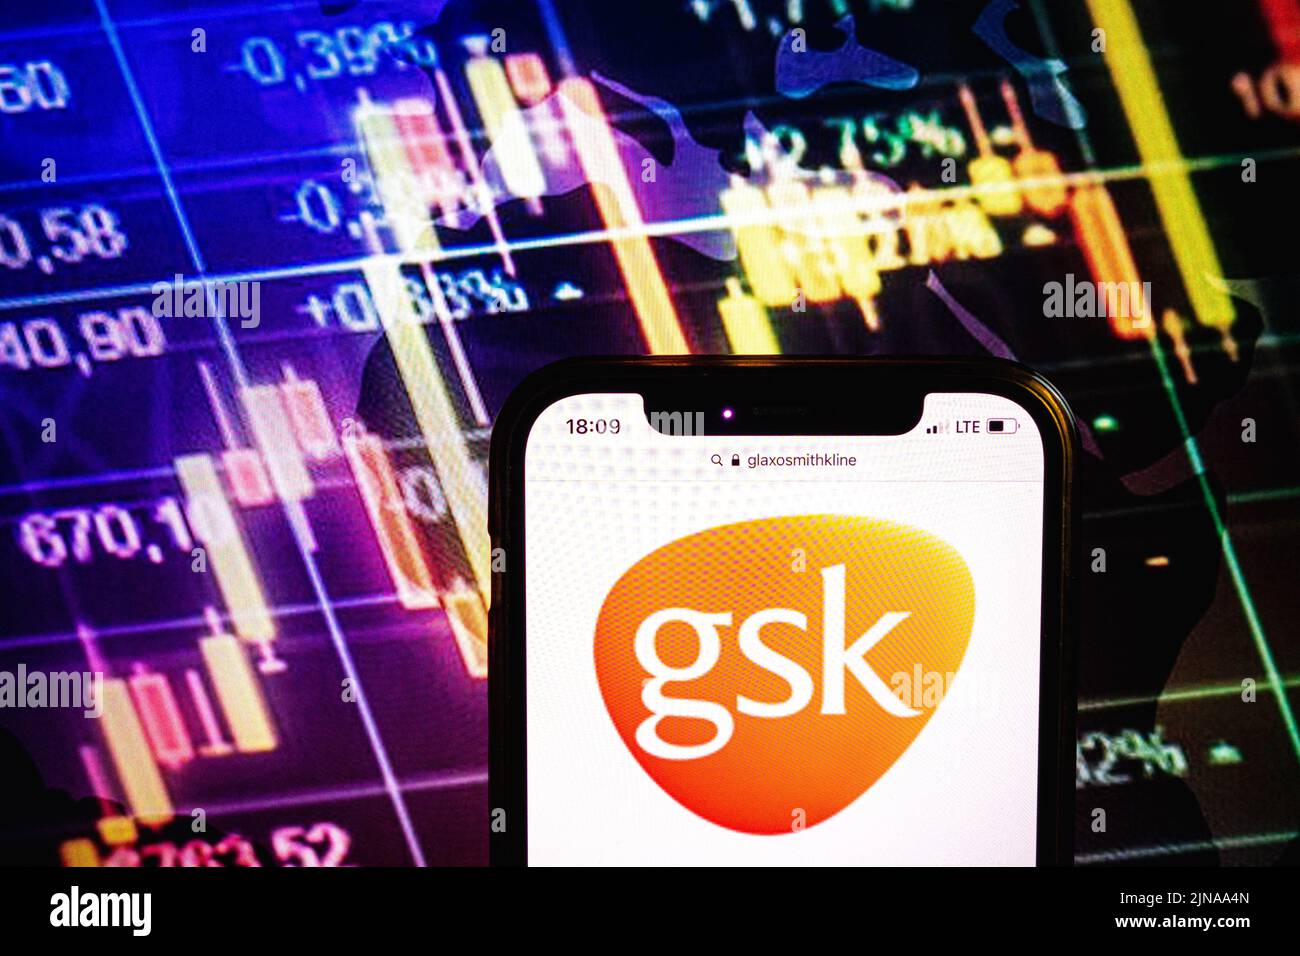 KONSKIE, POLAND - August 09, 2022: Smartphone displaying logo of GlaxoSmithKline company on stock exchange diagram background Stock Photo